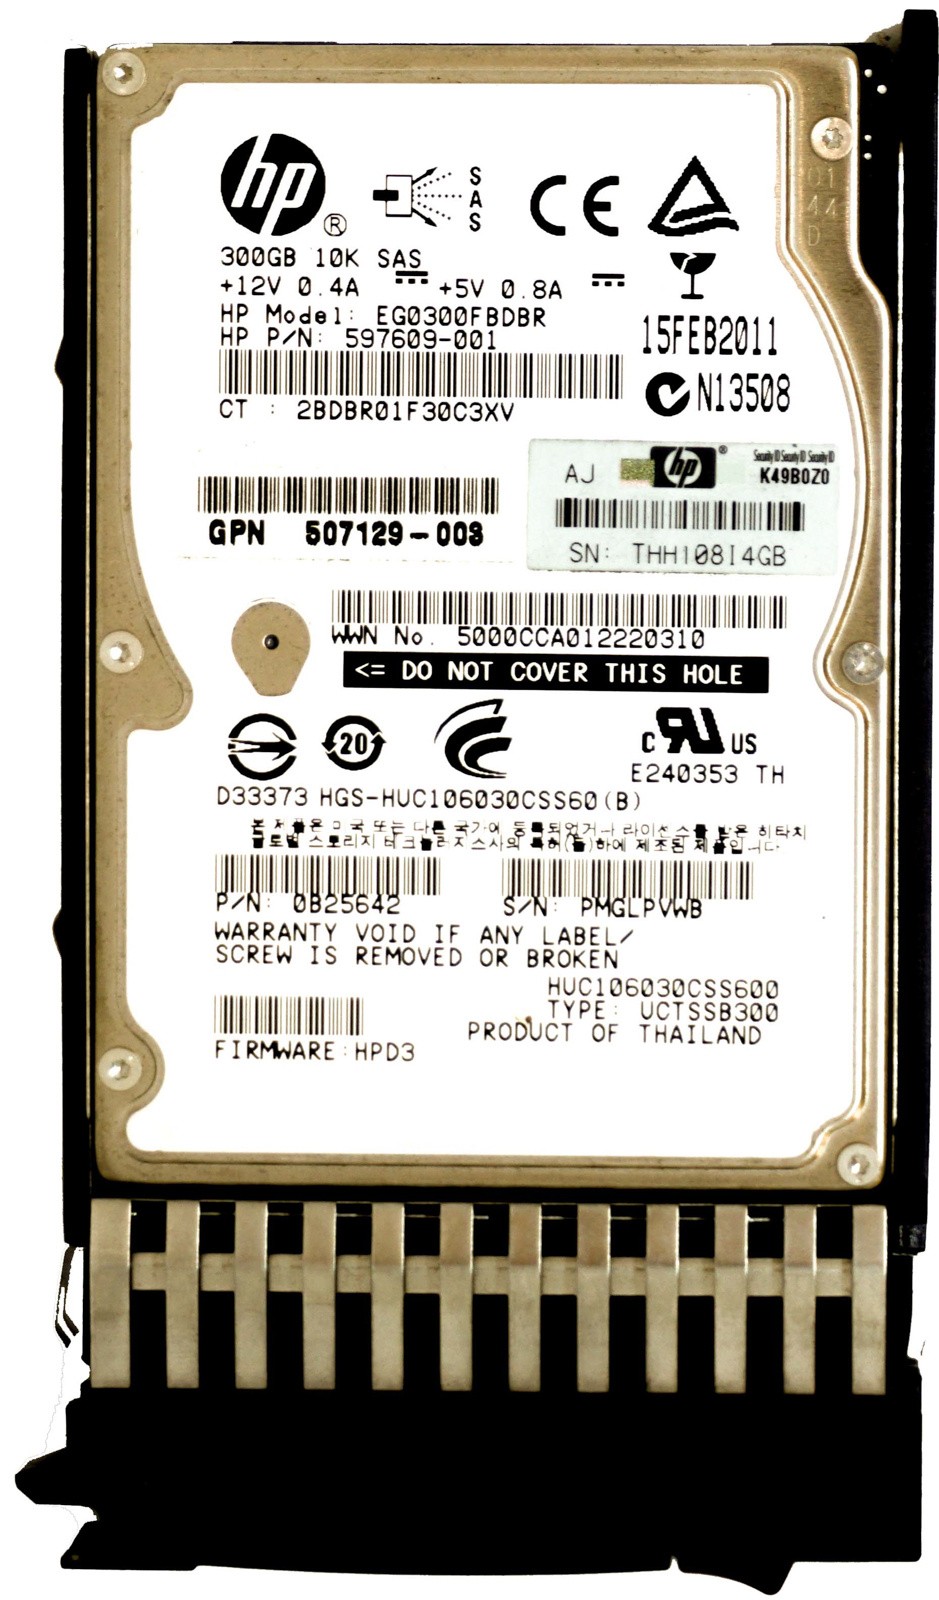 HP (597609-001) 300GB SAS-2 (2.5") 6Gbps 10K HDD in G5 Hot-Swap Caddy